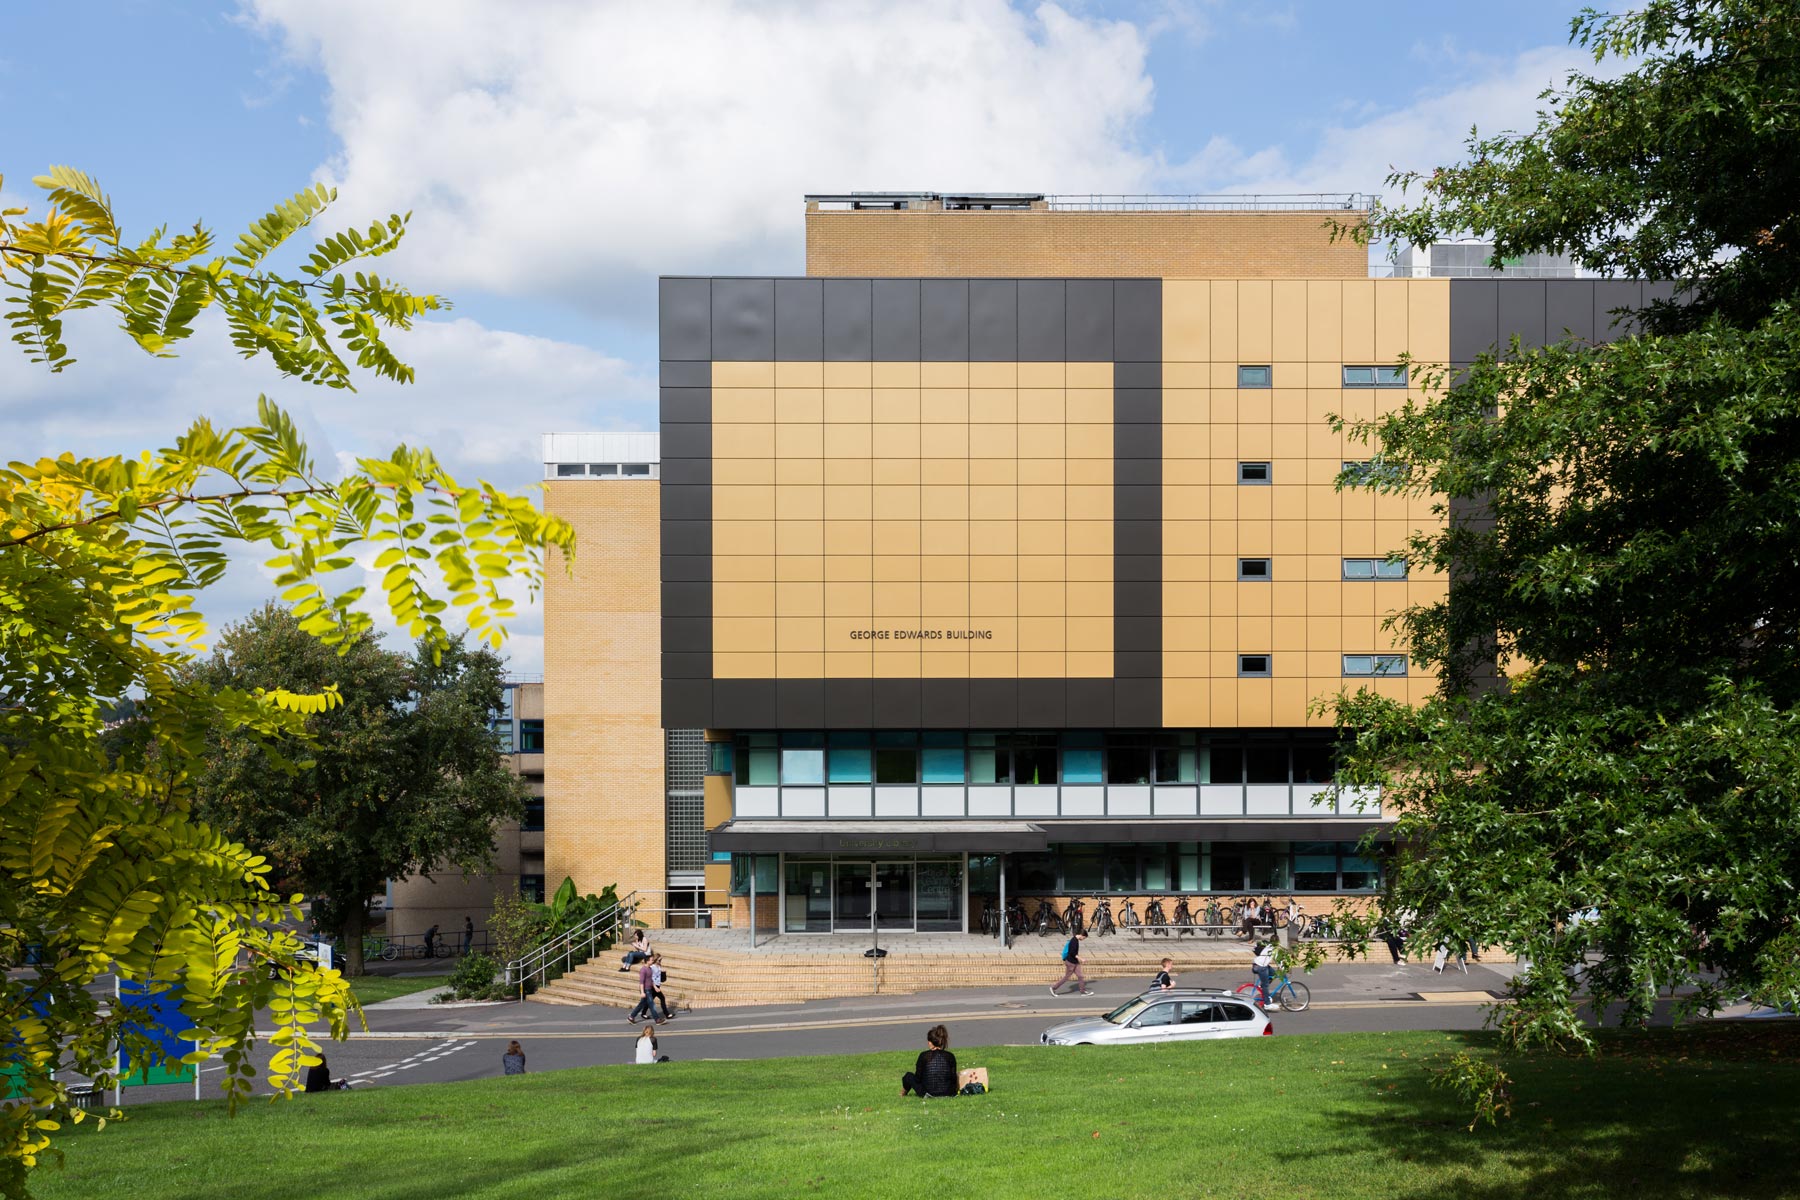 The University of Surrey Library Refurbishment